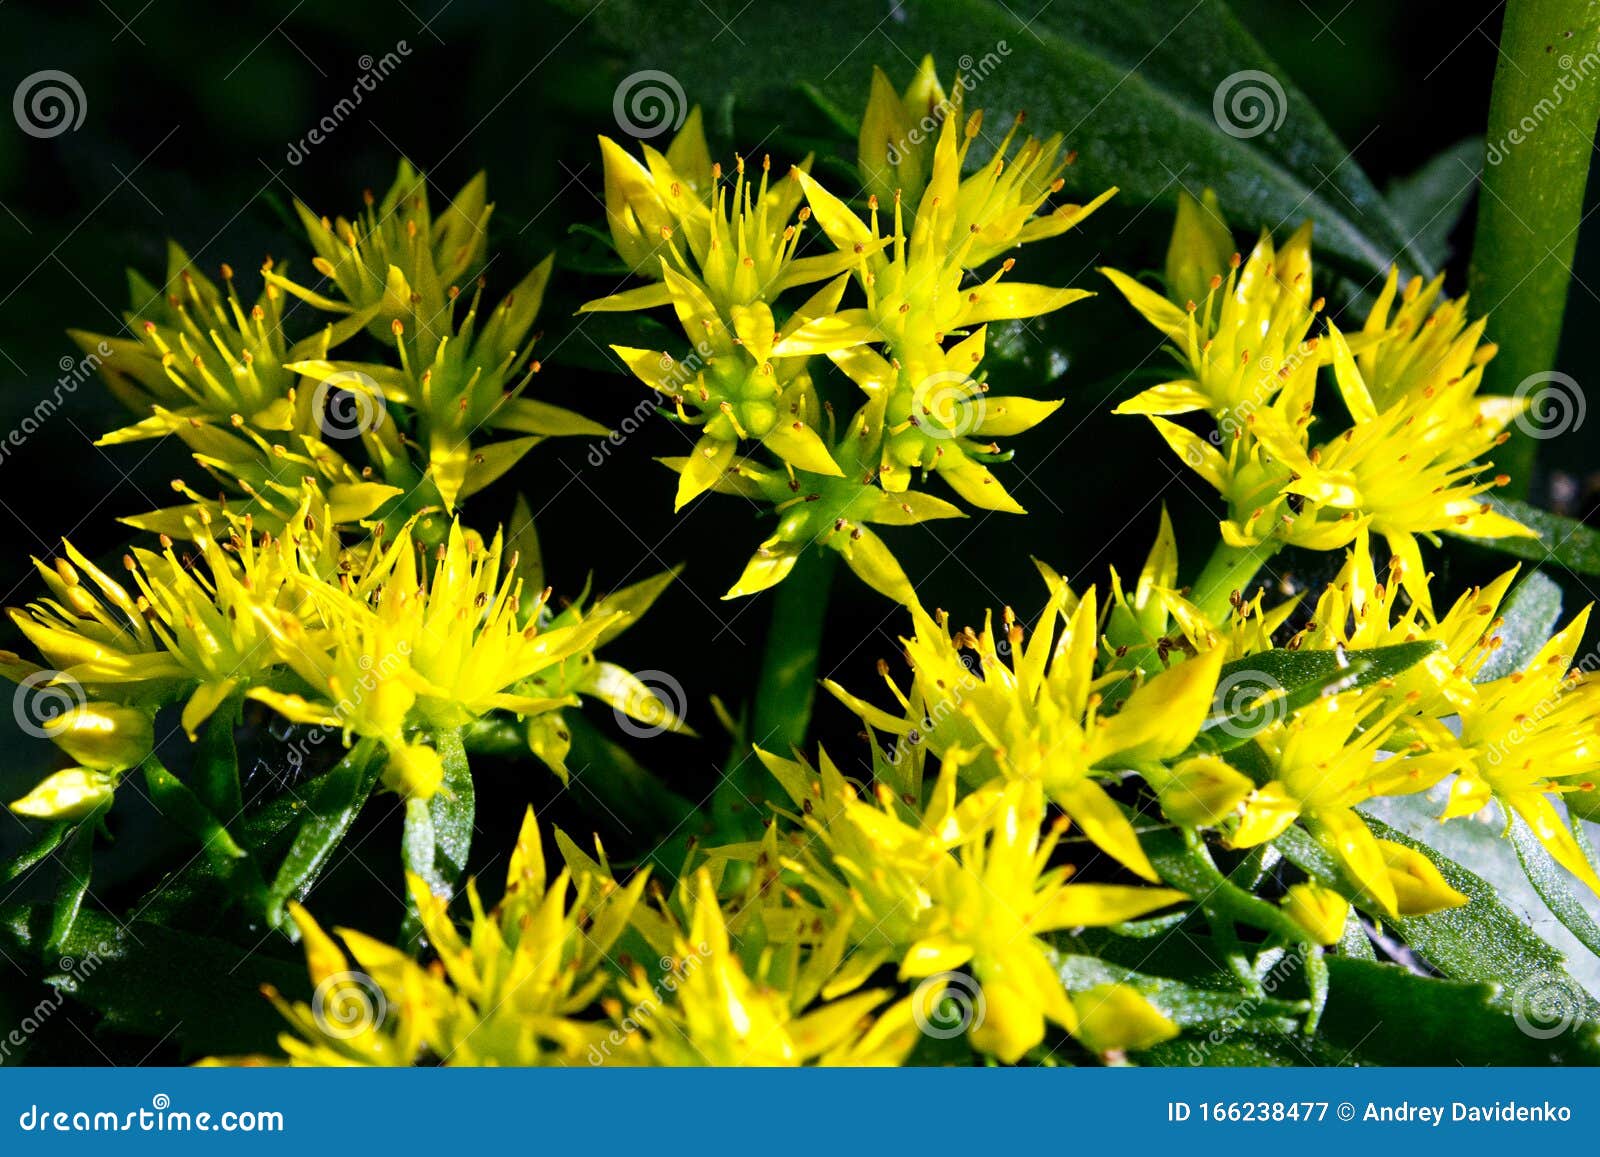 Golden Root Medicinal Plant Stock Image - Image of flower, medicinal ...